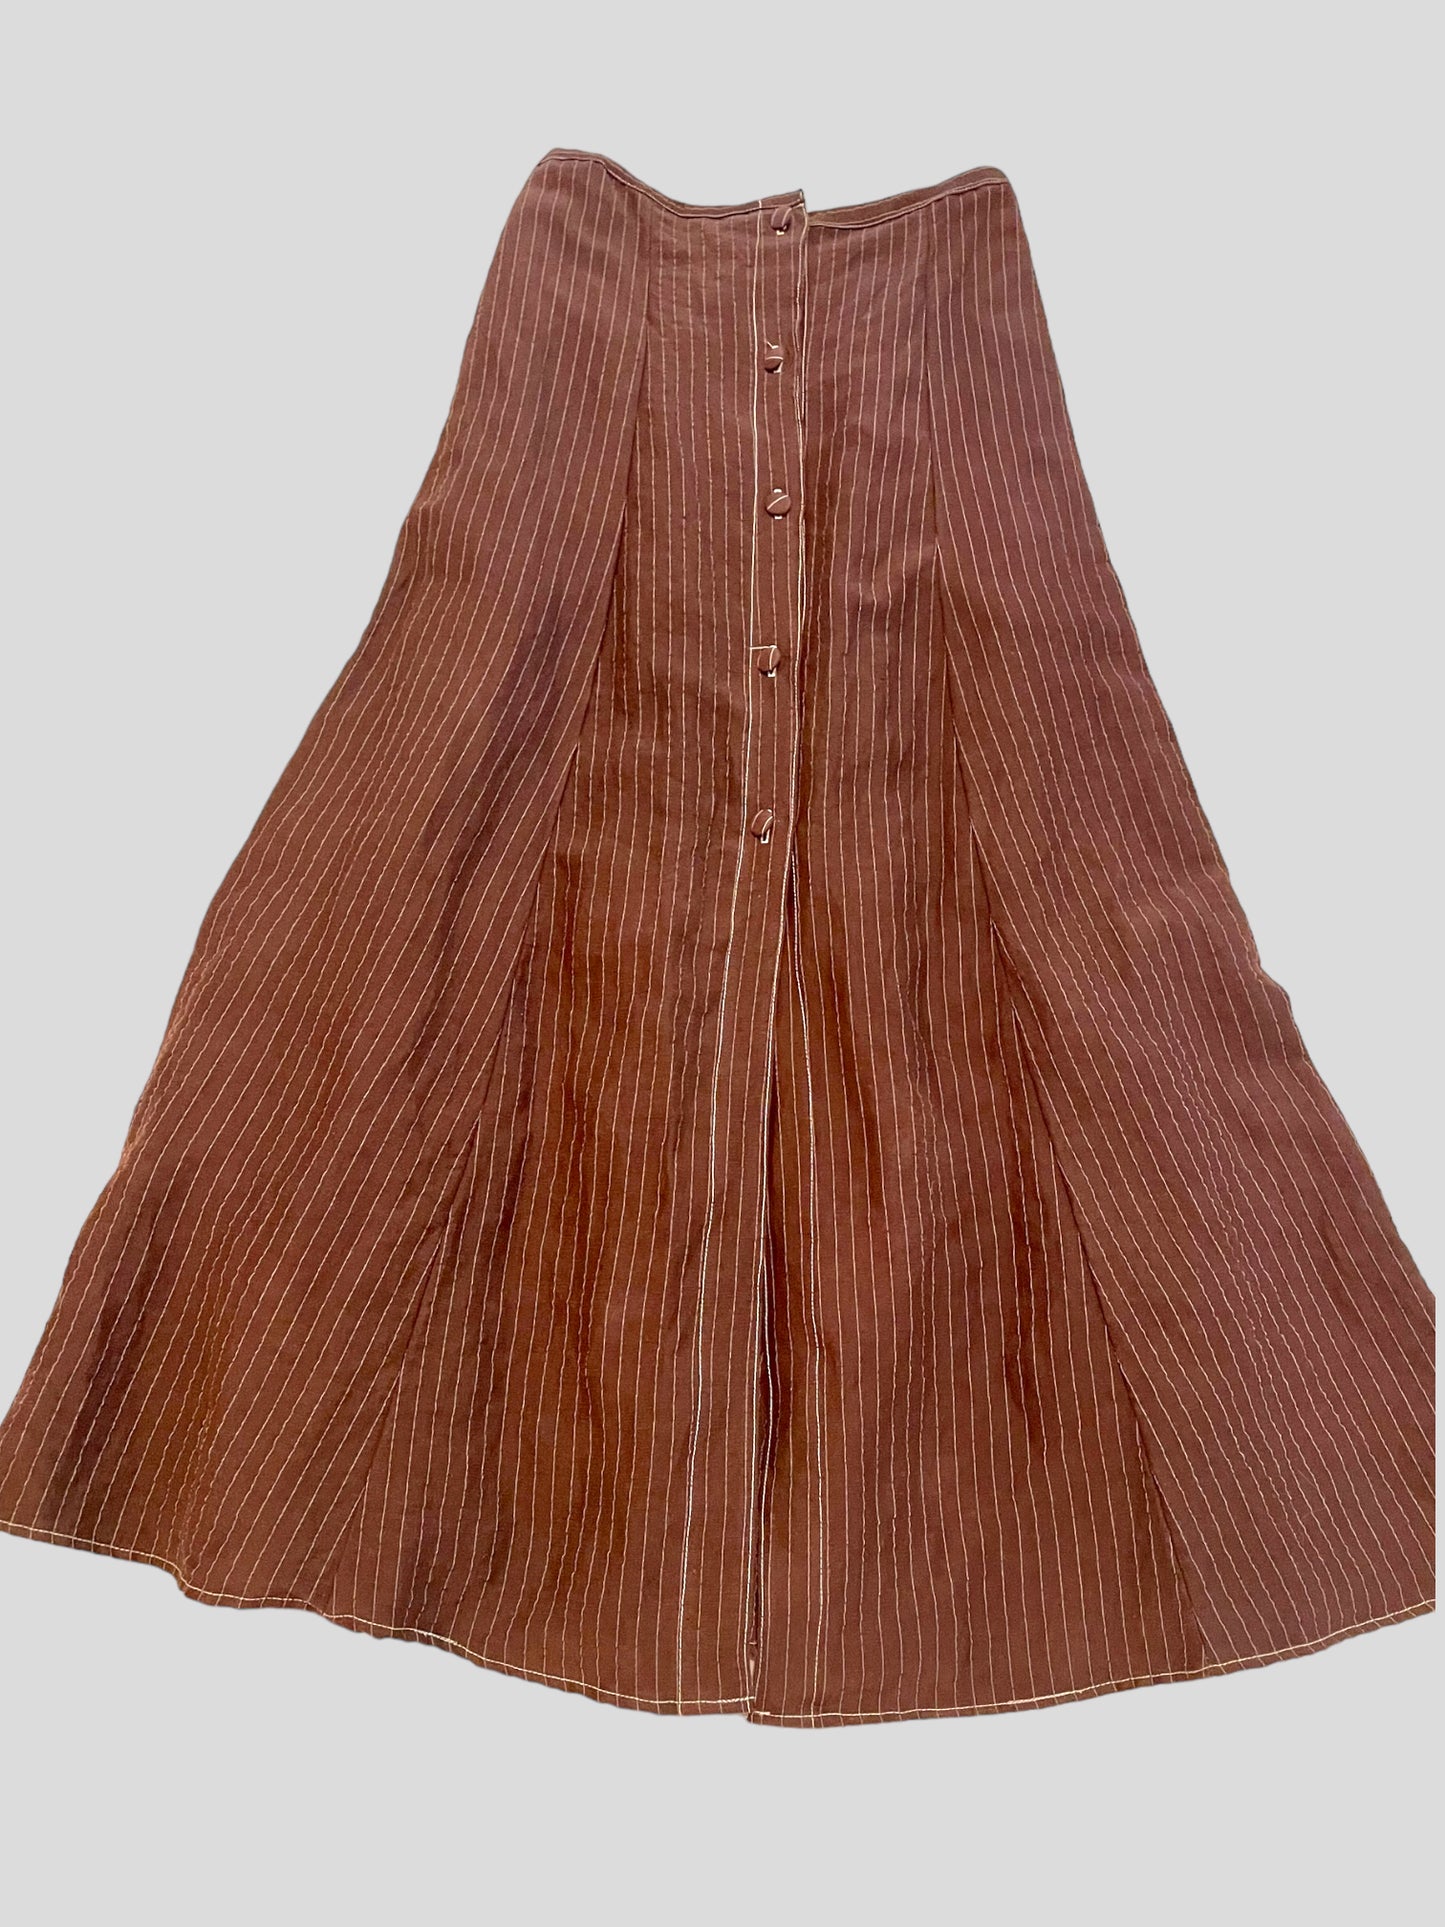 Prairie Skirt - Hickory Brown Linen